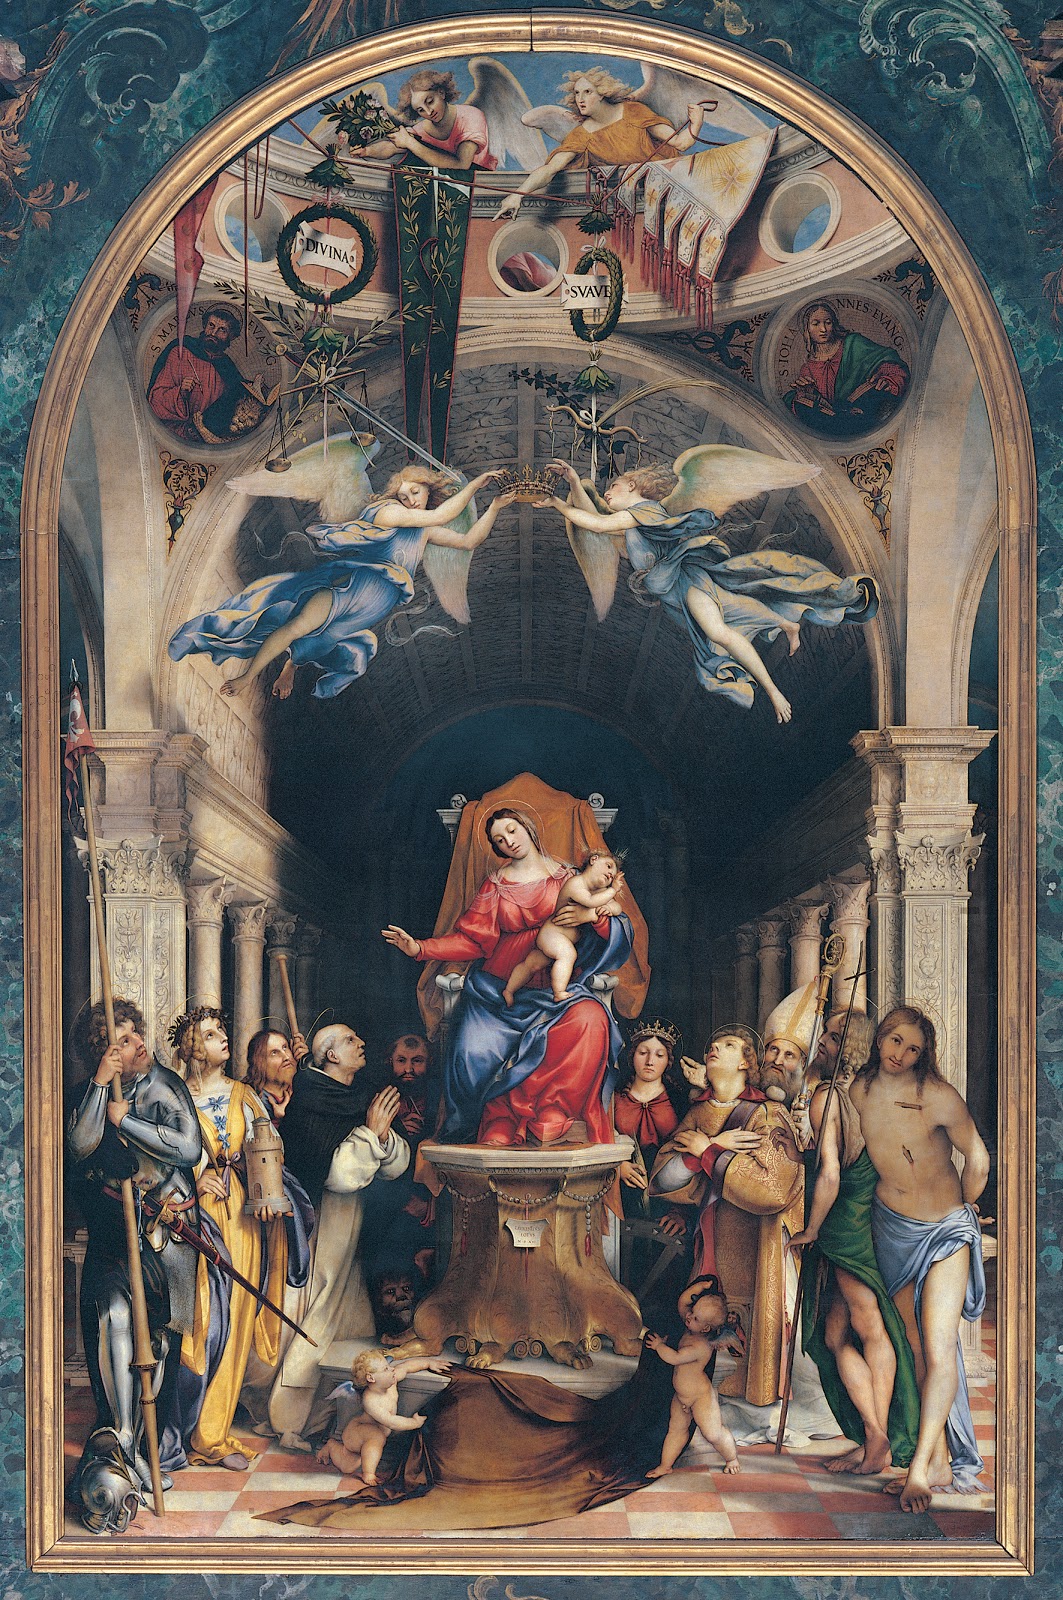 Lorenzo+Lotto-1480-1557 (63).jpg